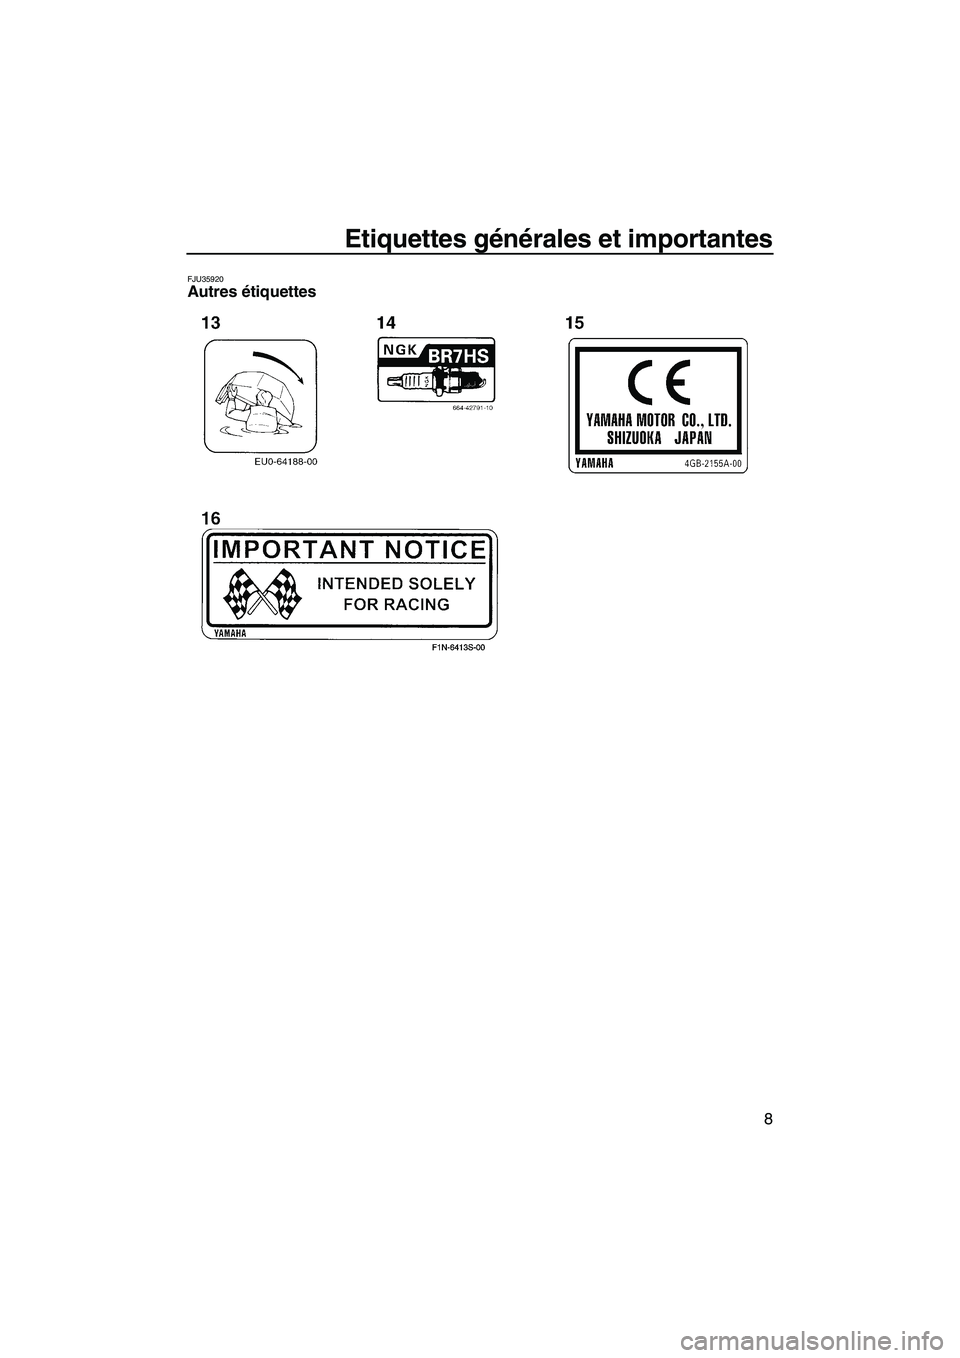 YAMAHA SUPERJET 2007  Notices Demploi (in French) Etiquettes générales et importantes
8
FJU35920Autres étiquettes 
UF1N75F0.book  Page 8  Tuesday, May 16, 2006  9:19 AM 